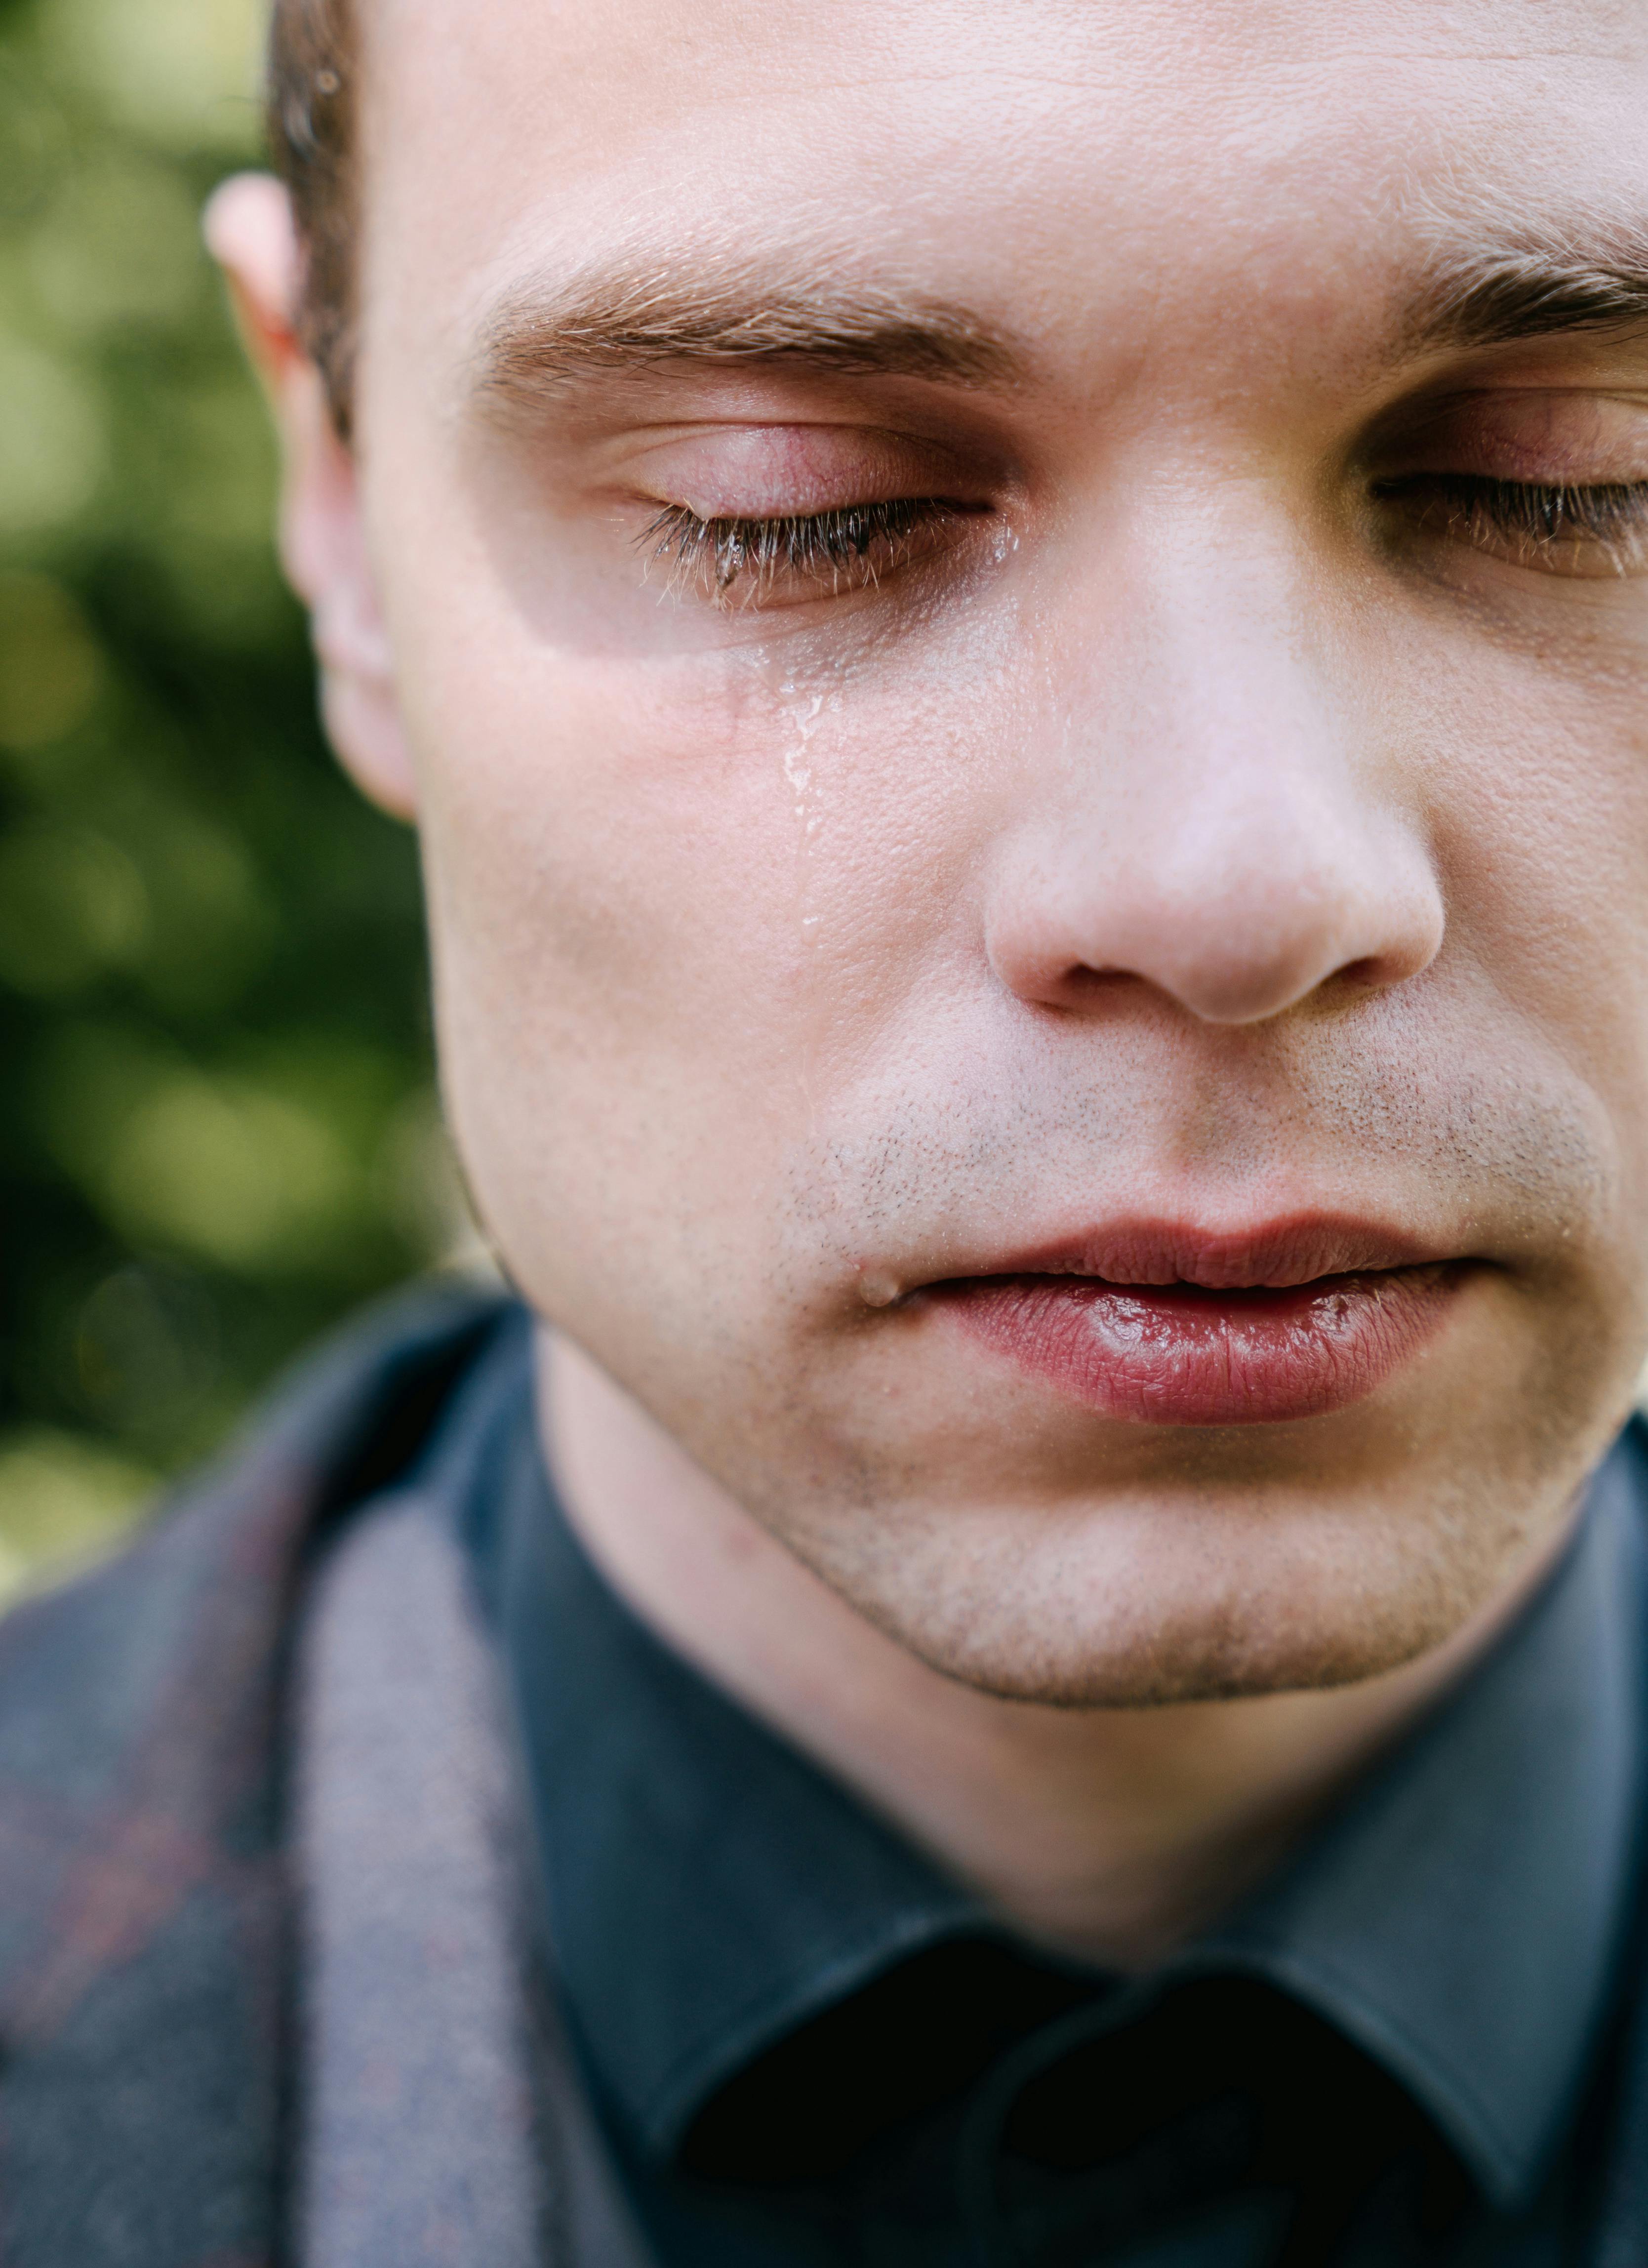 A man crying | Source: Pexels